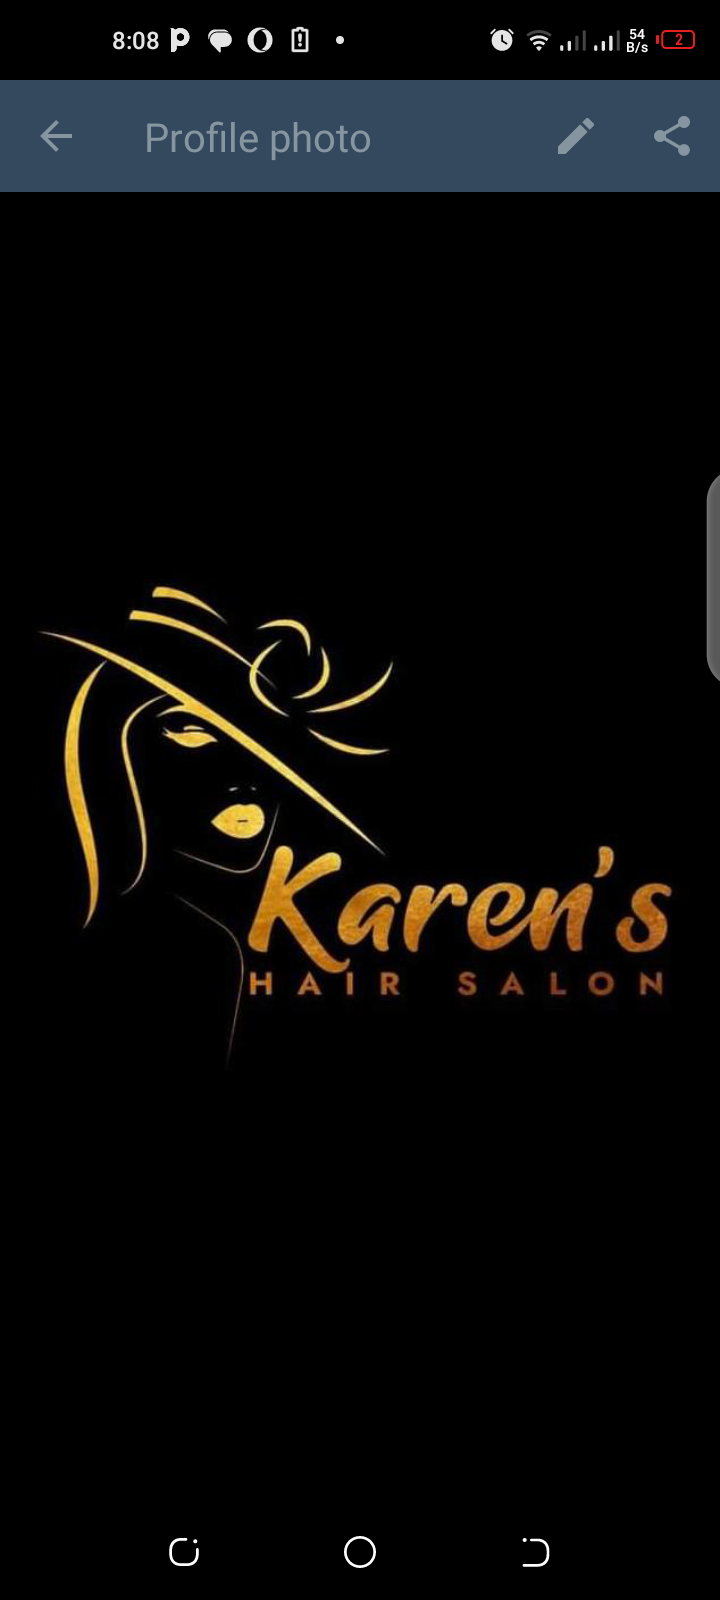 Karen's salon 